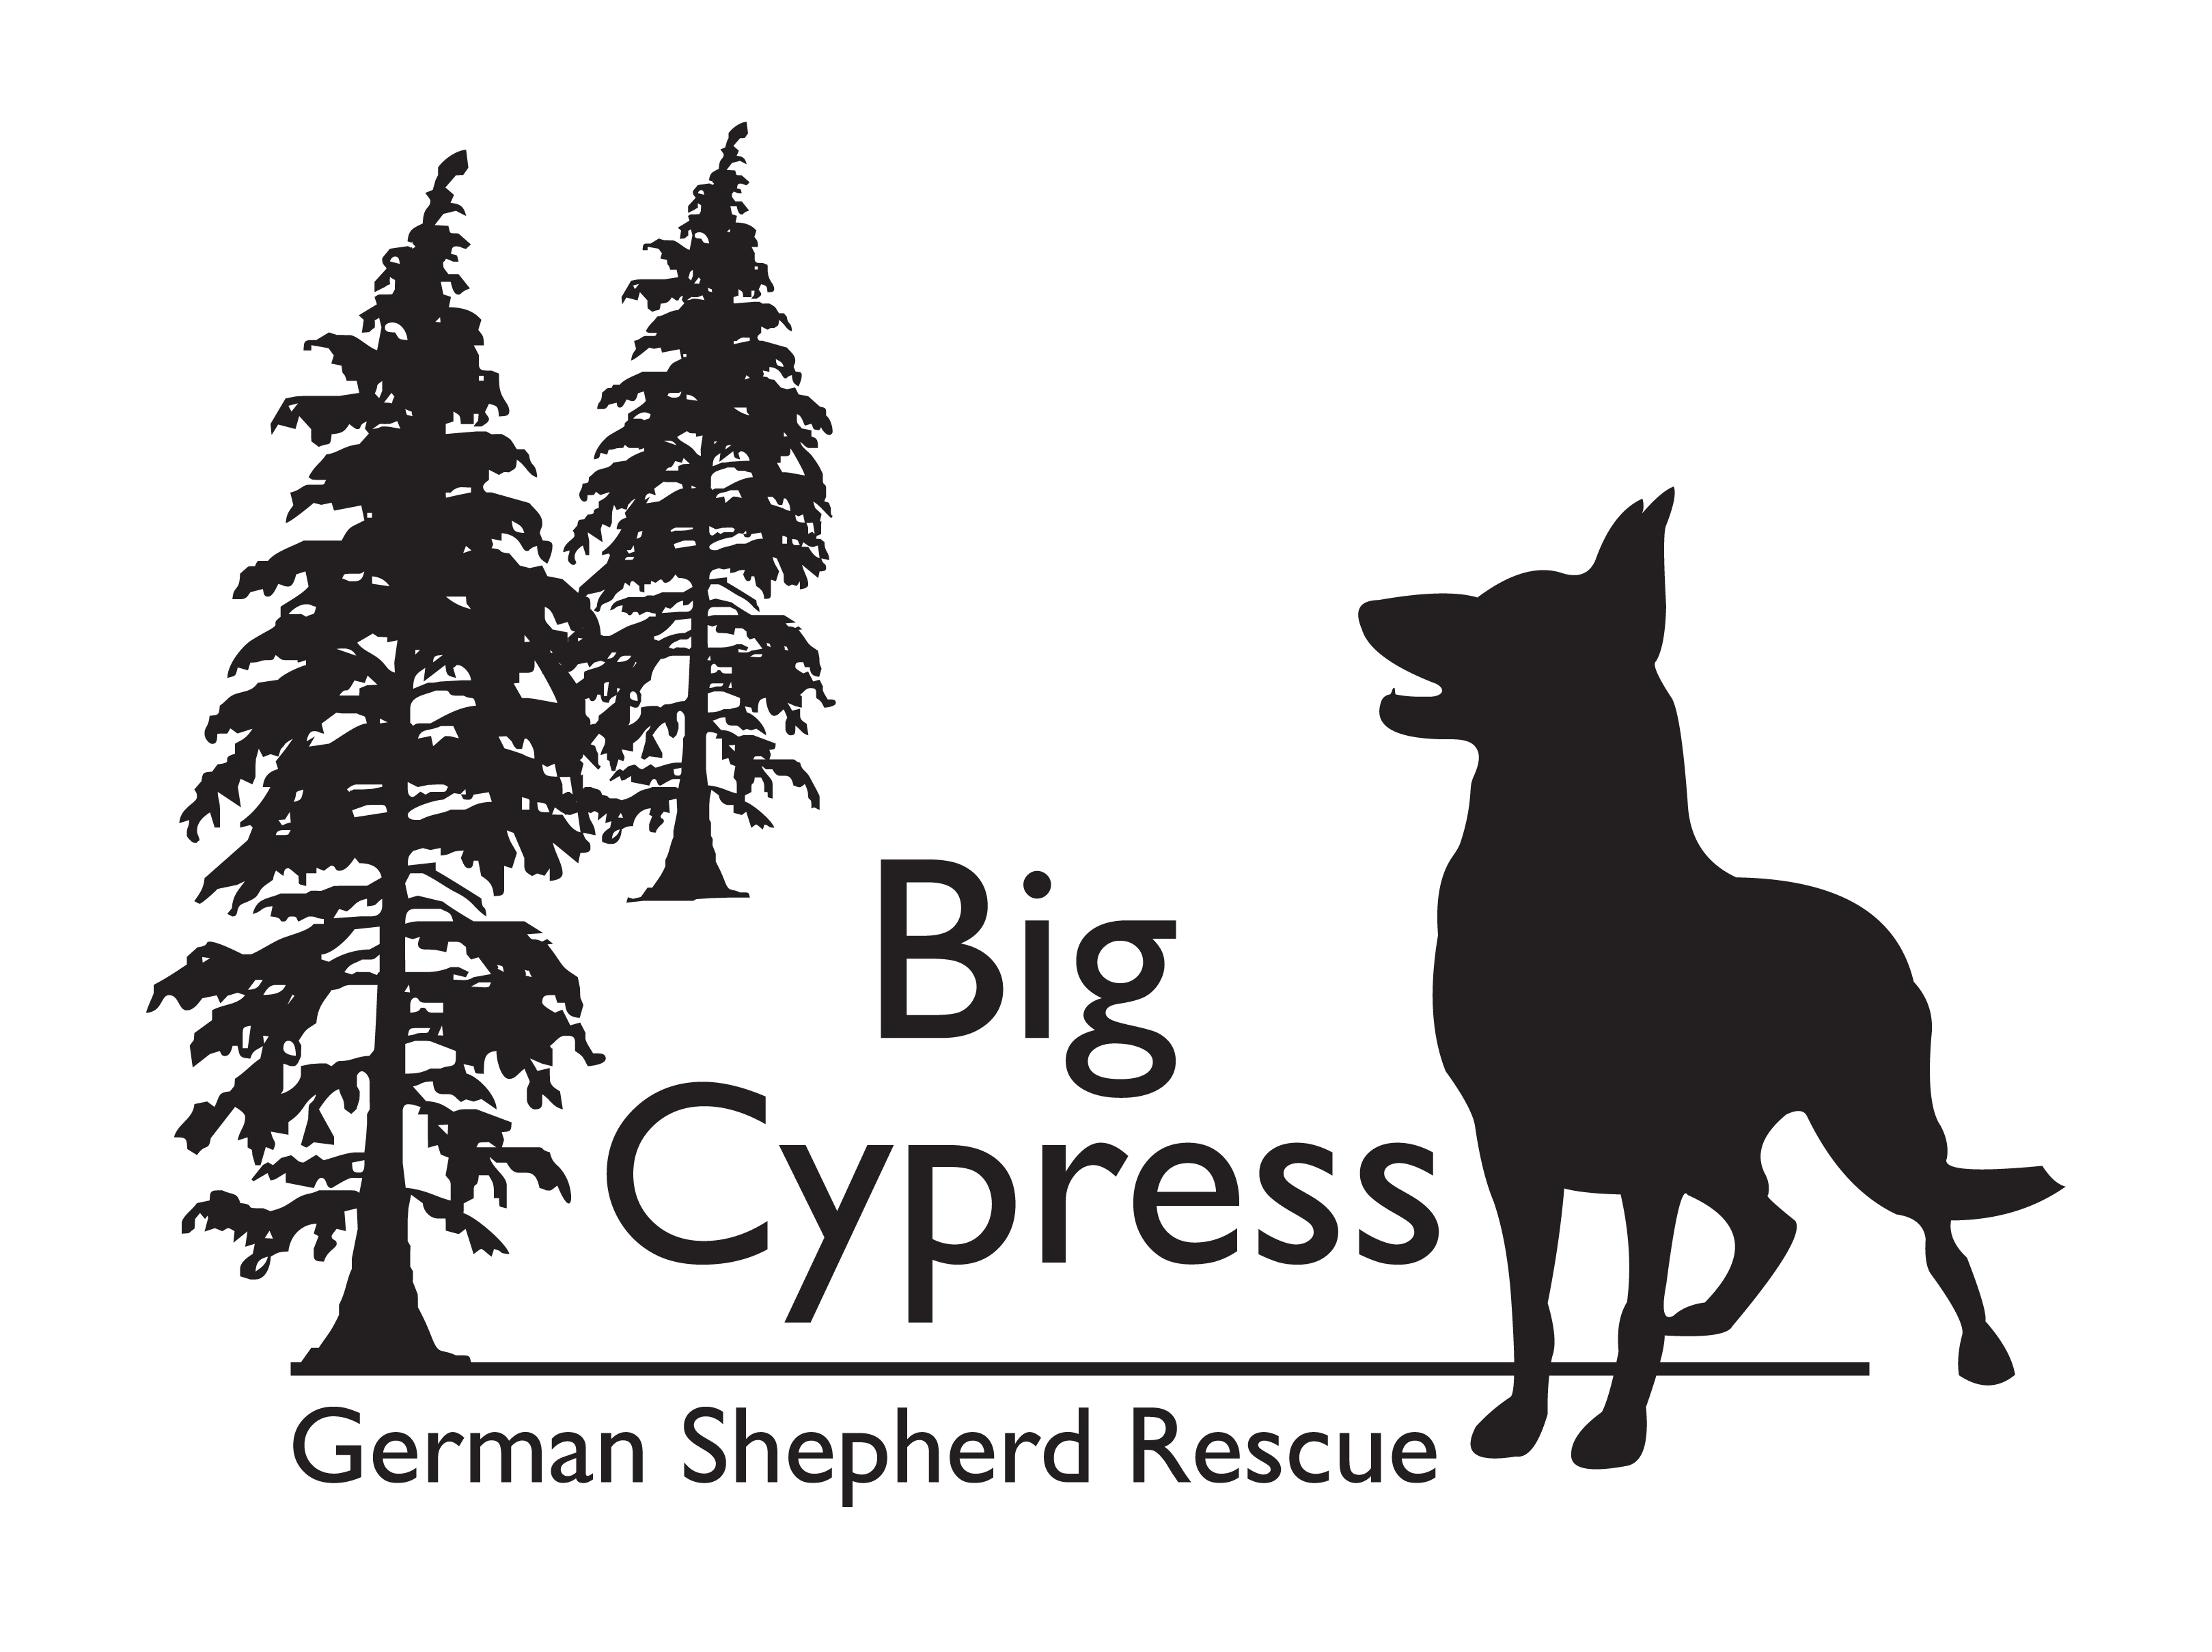 Big Cypress German Shepherd Rescue - www.inf-inet.com